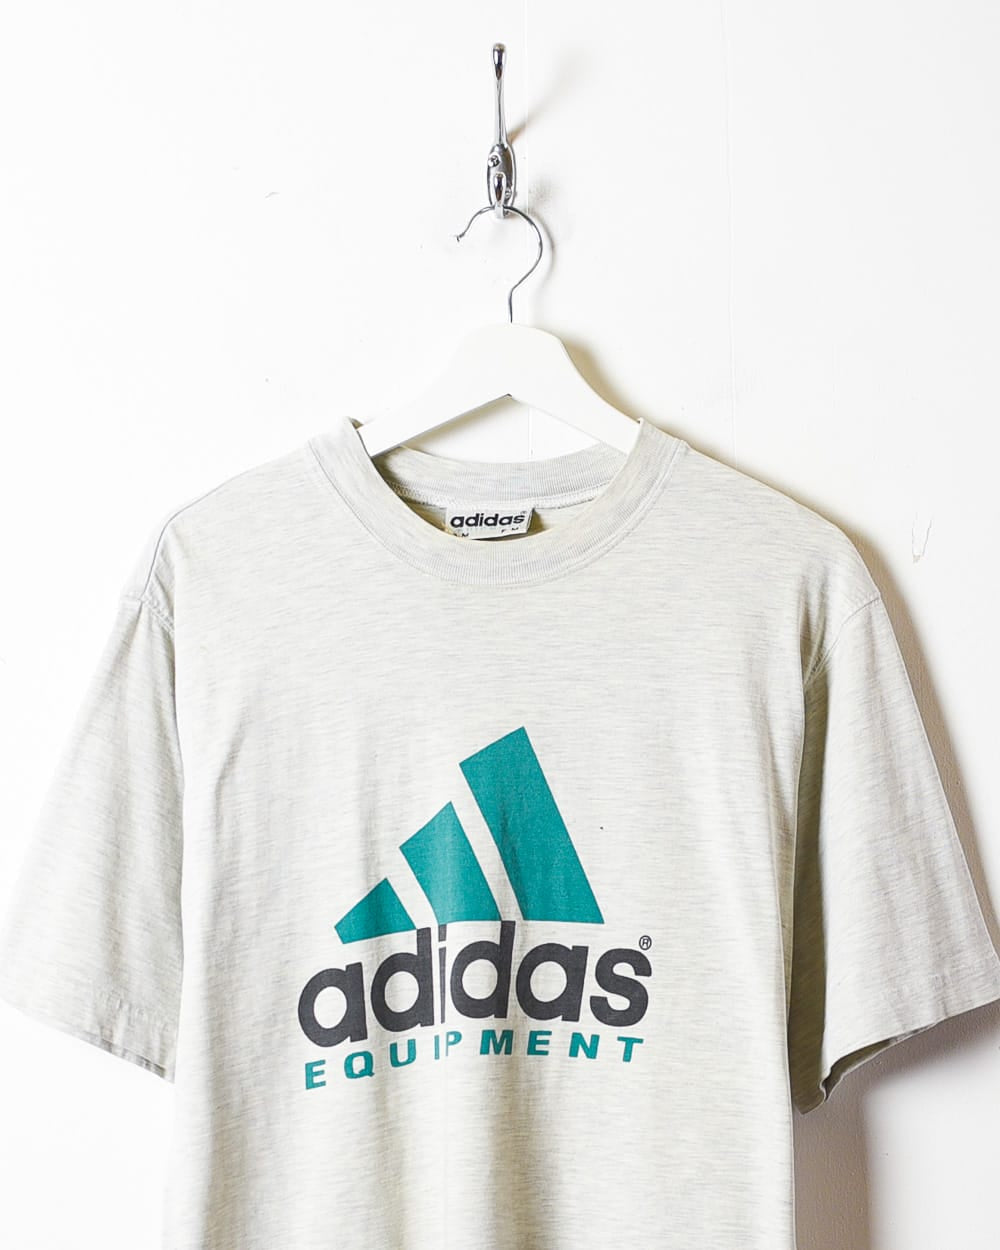 Stone Adidas Equipment T-Shirt - Medium